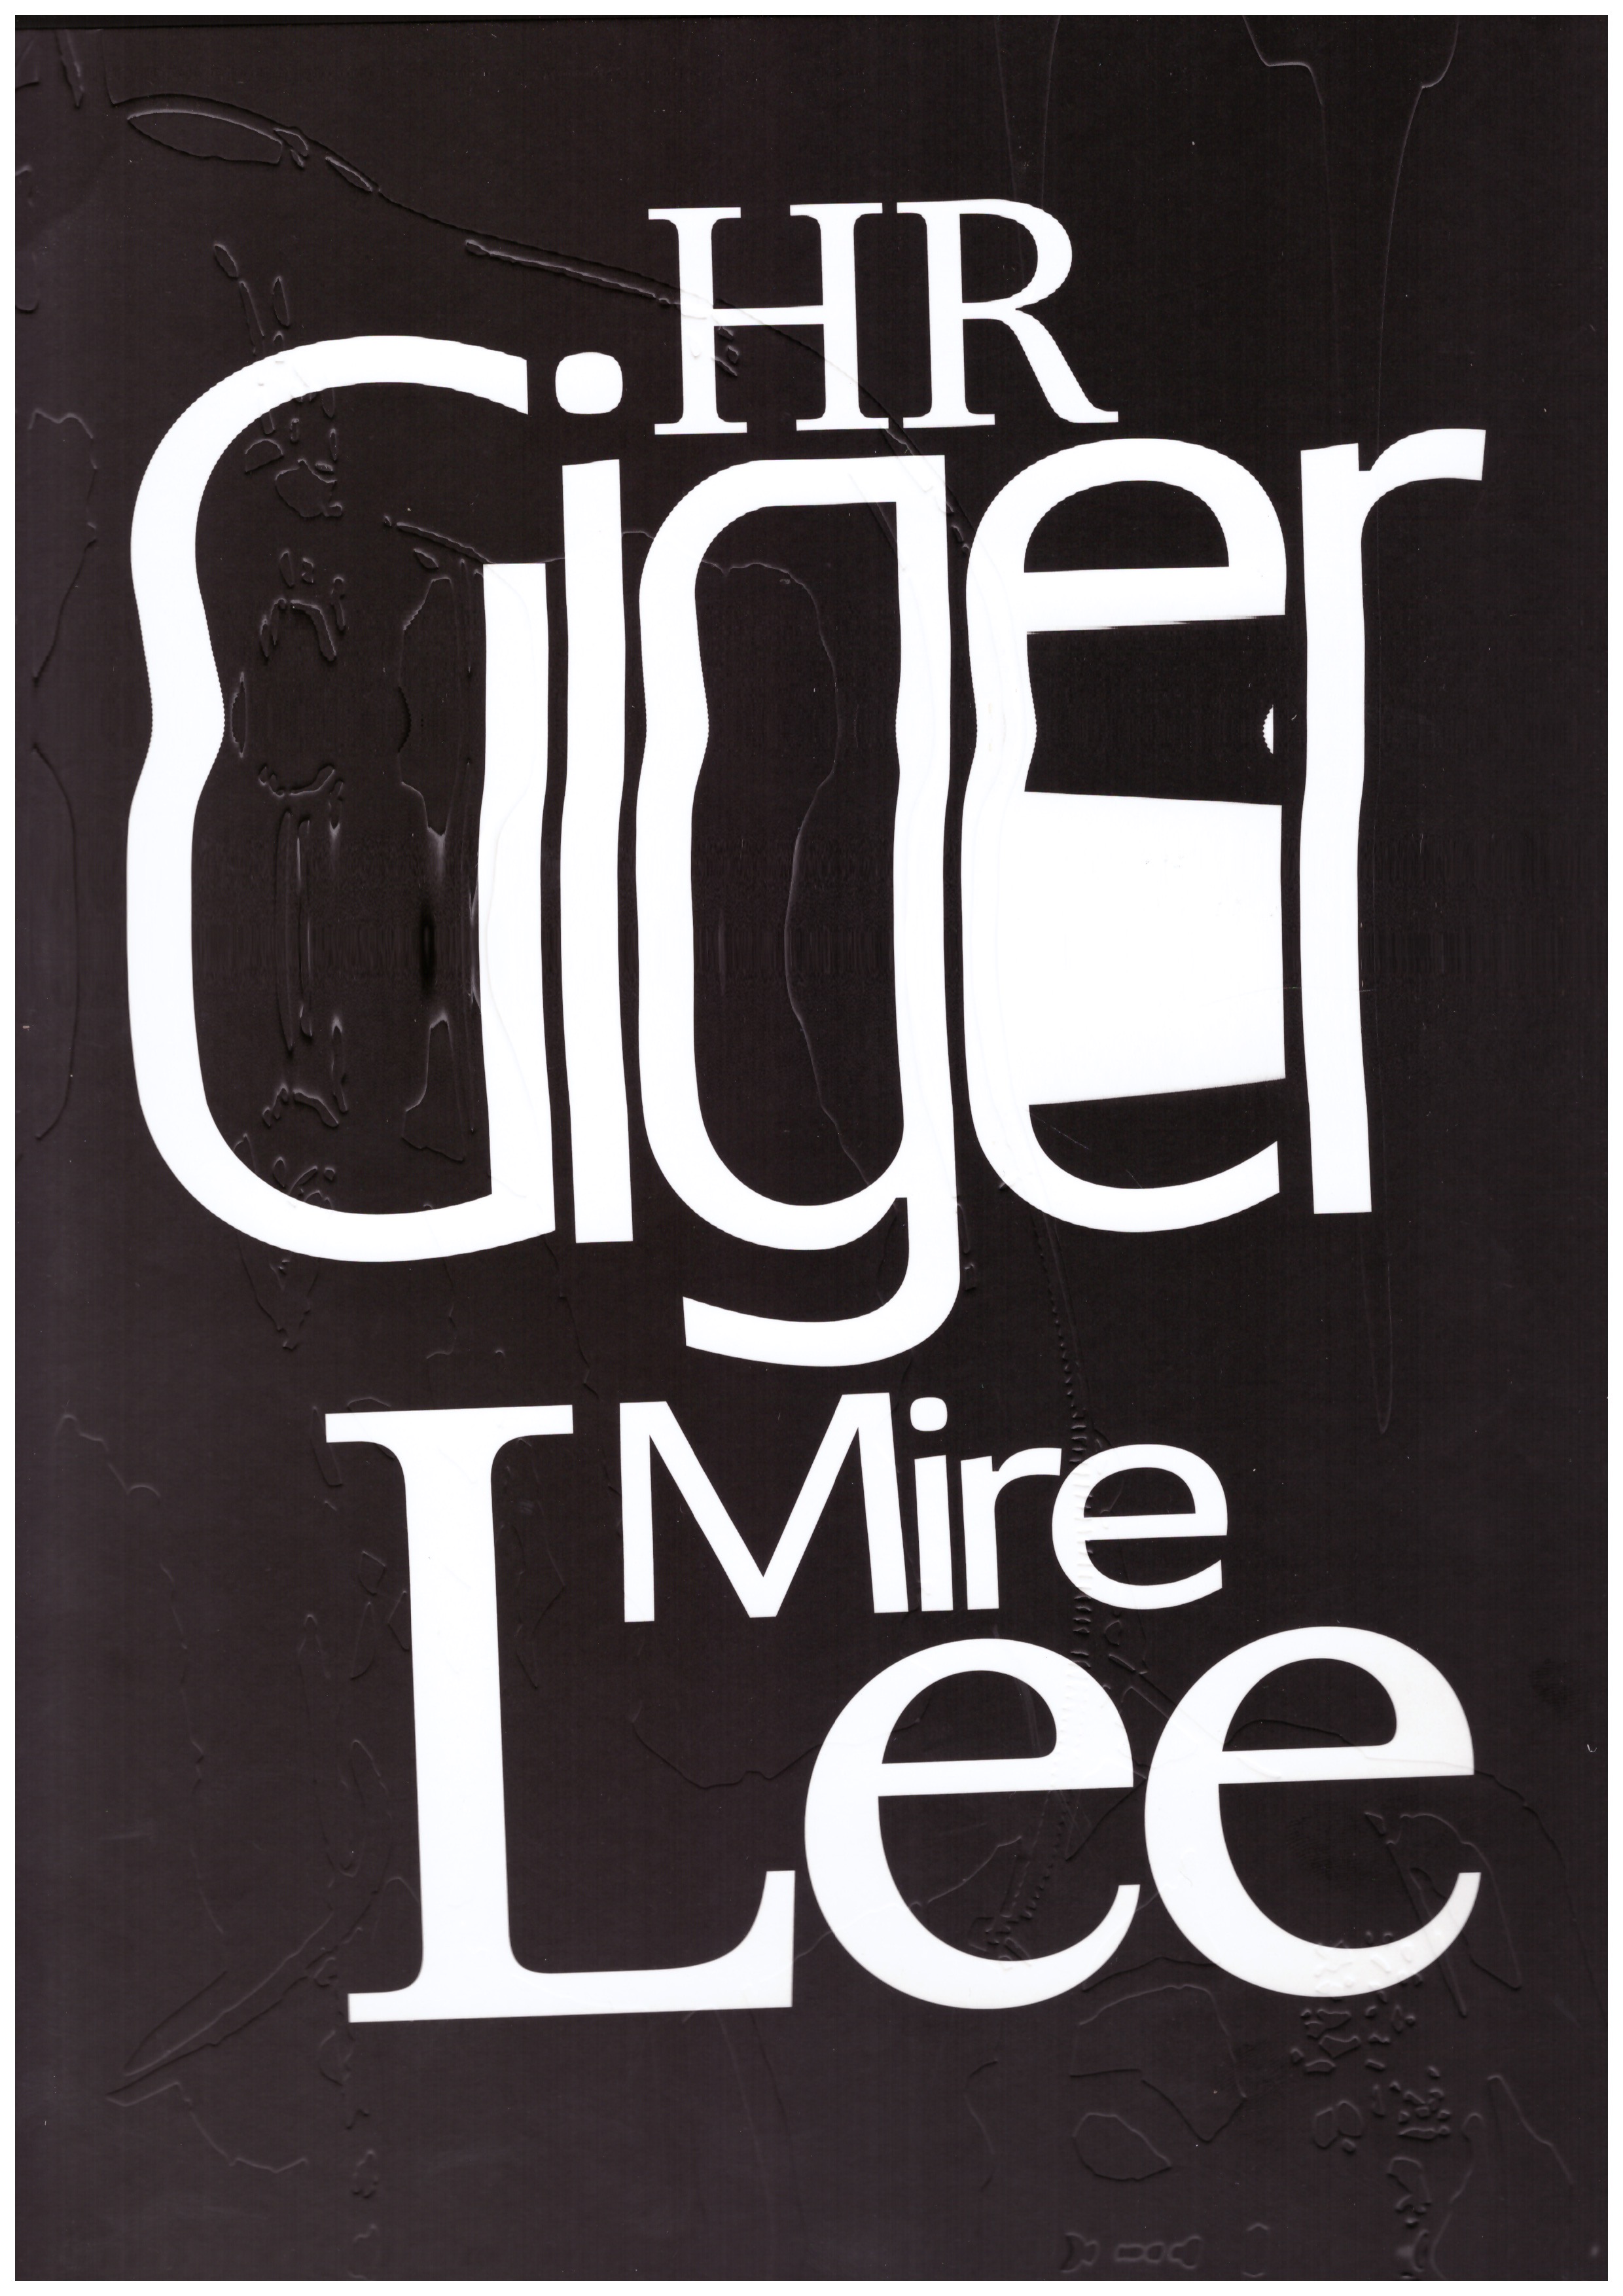 GIGER, HR; LEE, Mire; GRYCZKOWSKA, Agnes (ed.) - HR Giger & Mire Lee